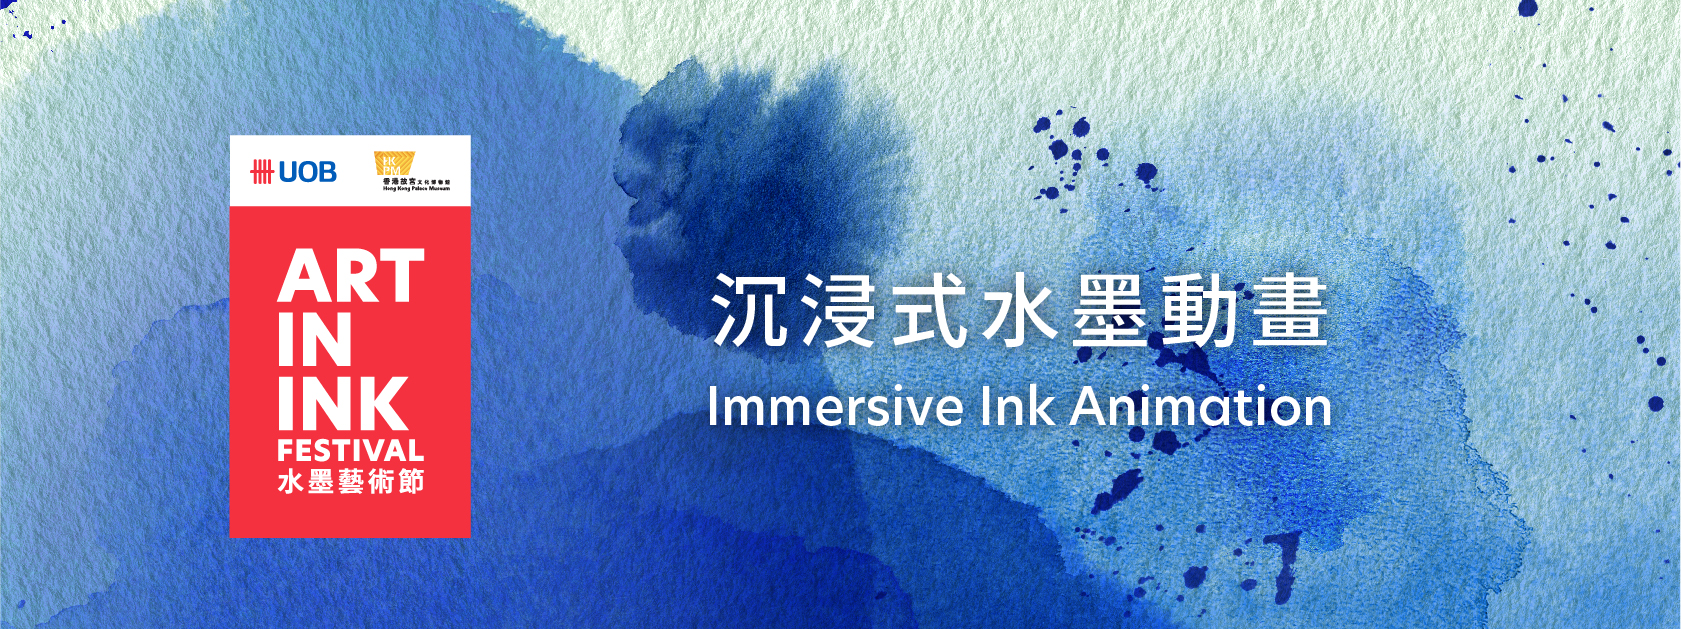 Immersive Ink Animation